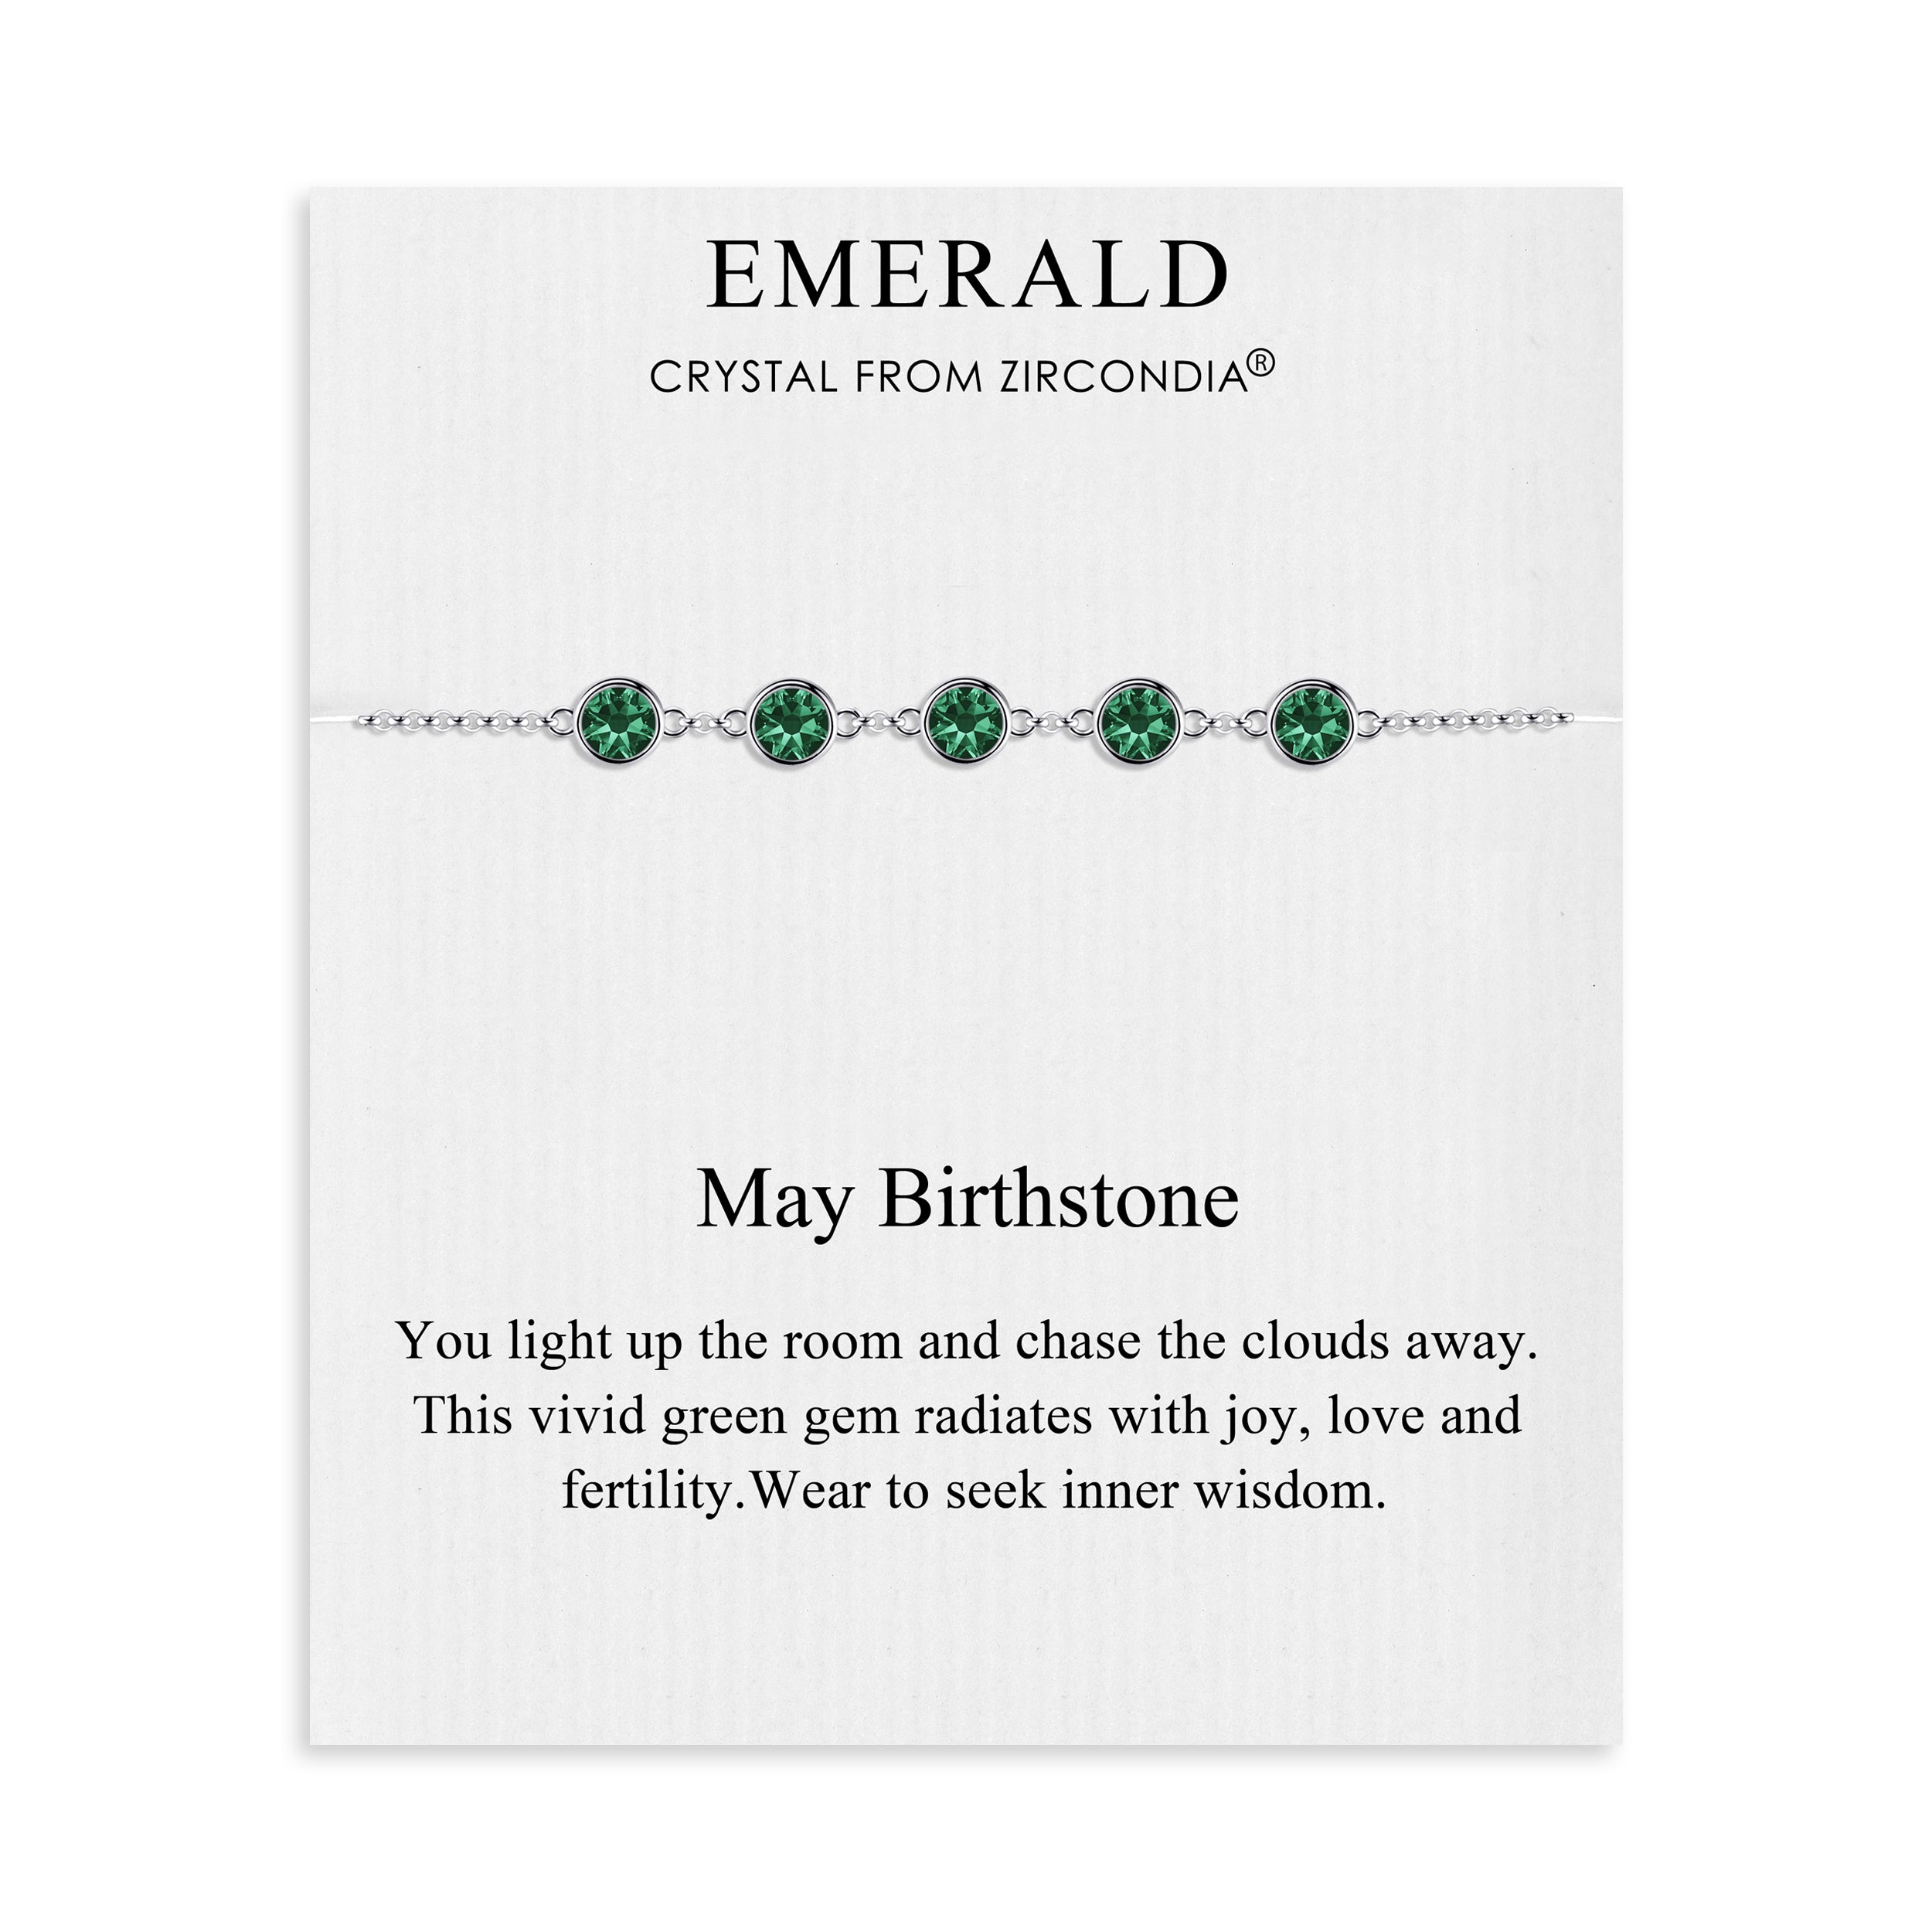 May Birthstone Bracelet Created with Emerald Zircondia® Crystals by Philip Jones Jewellery